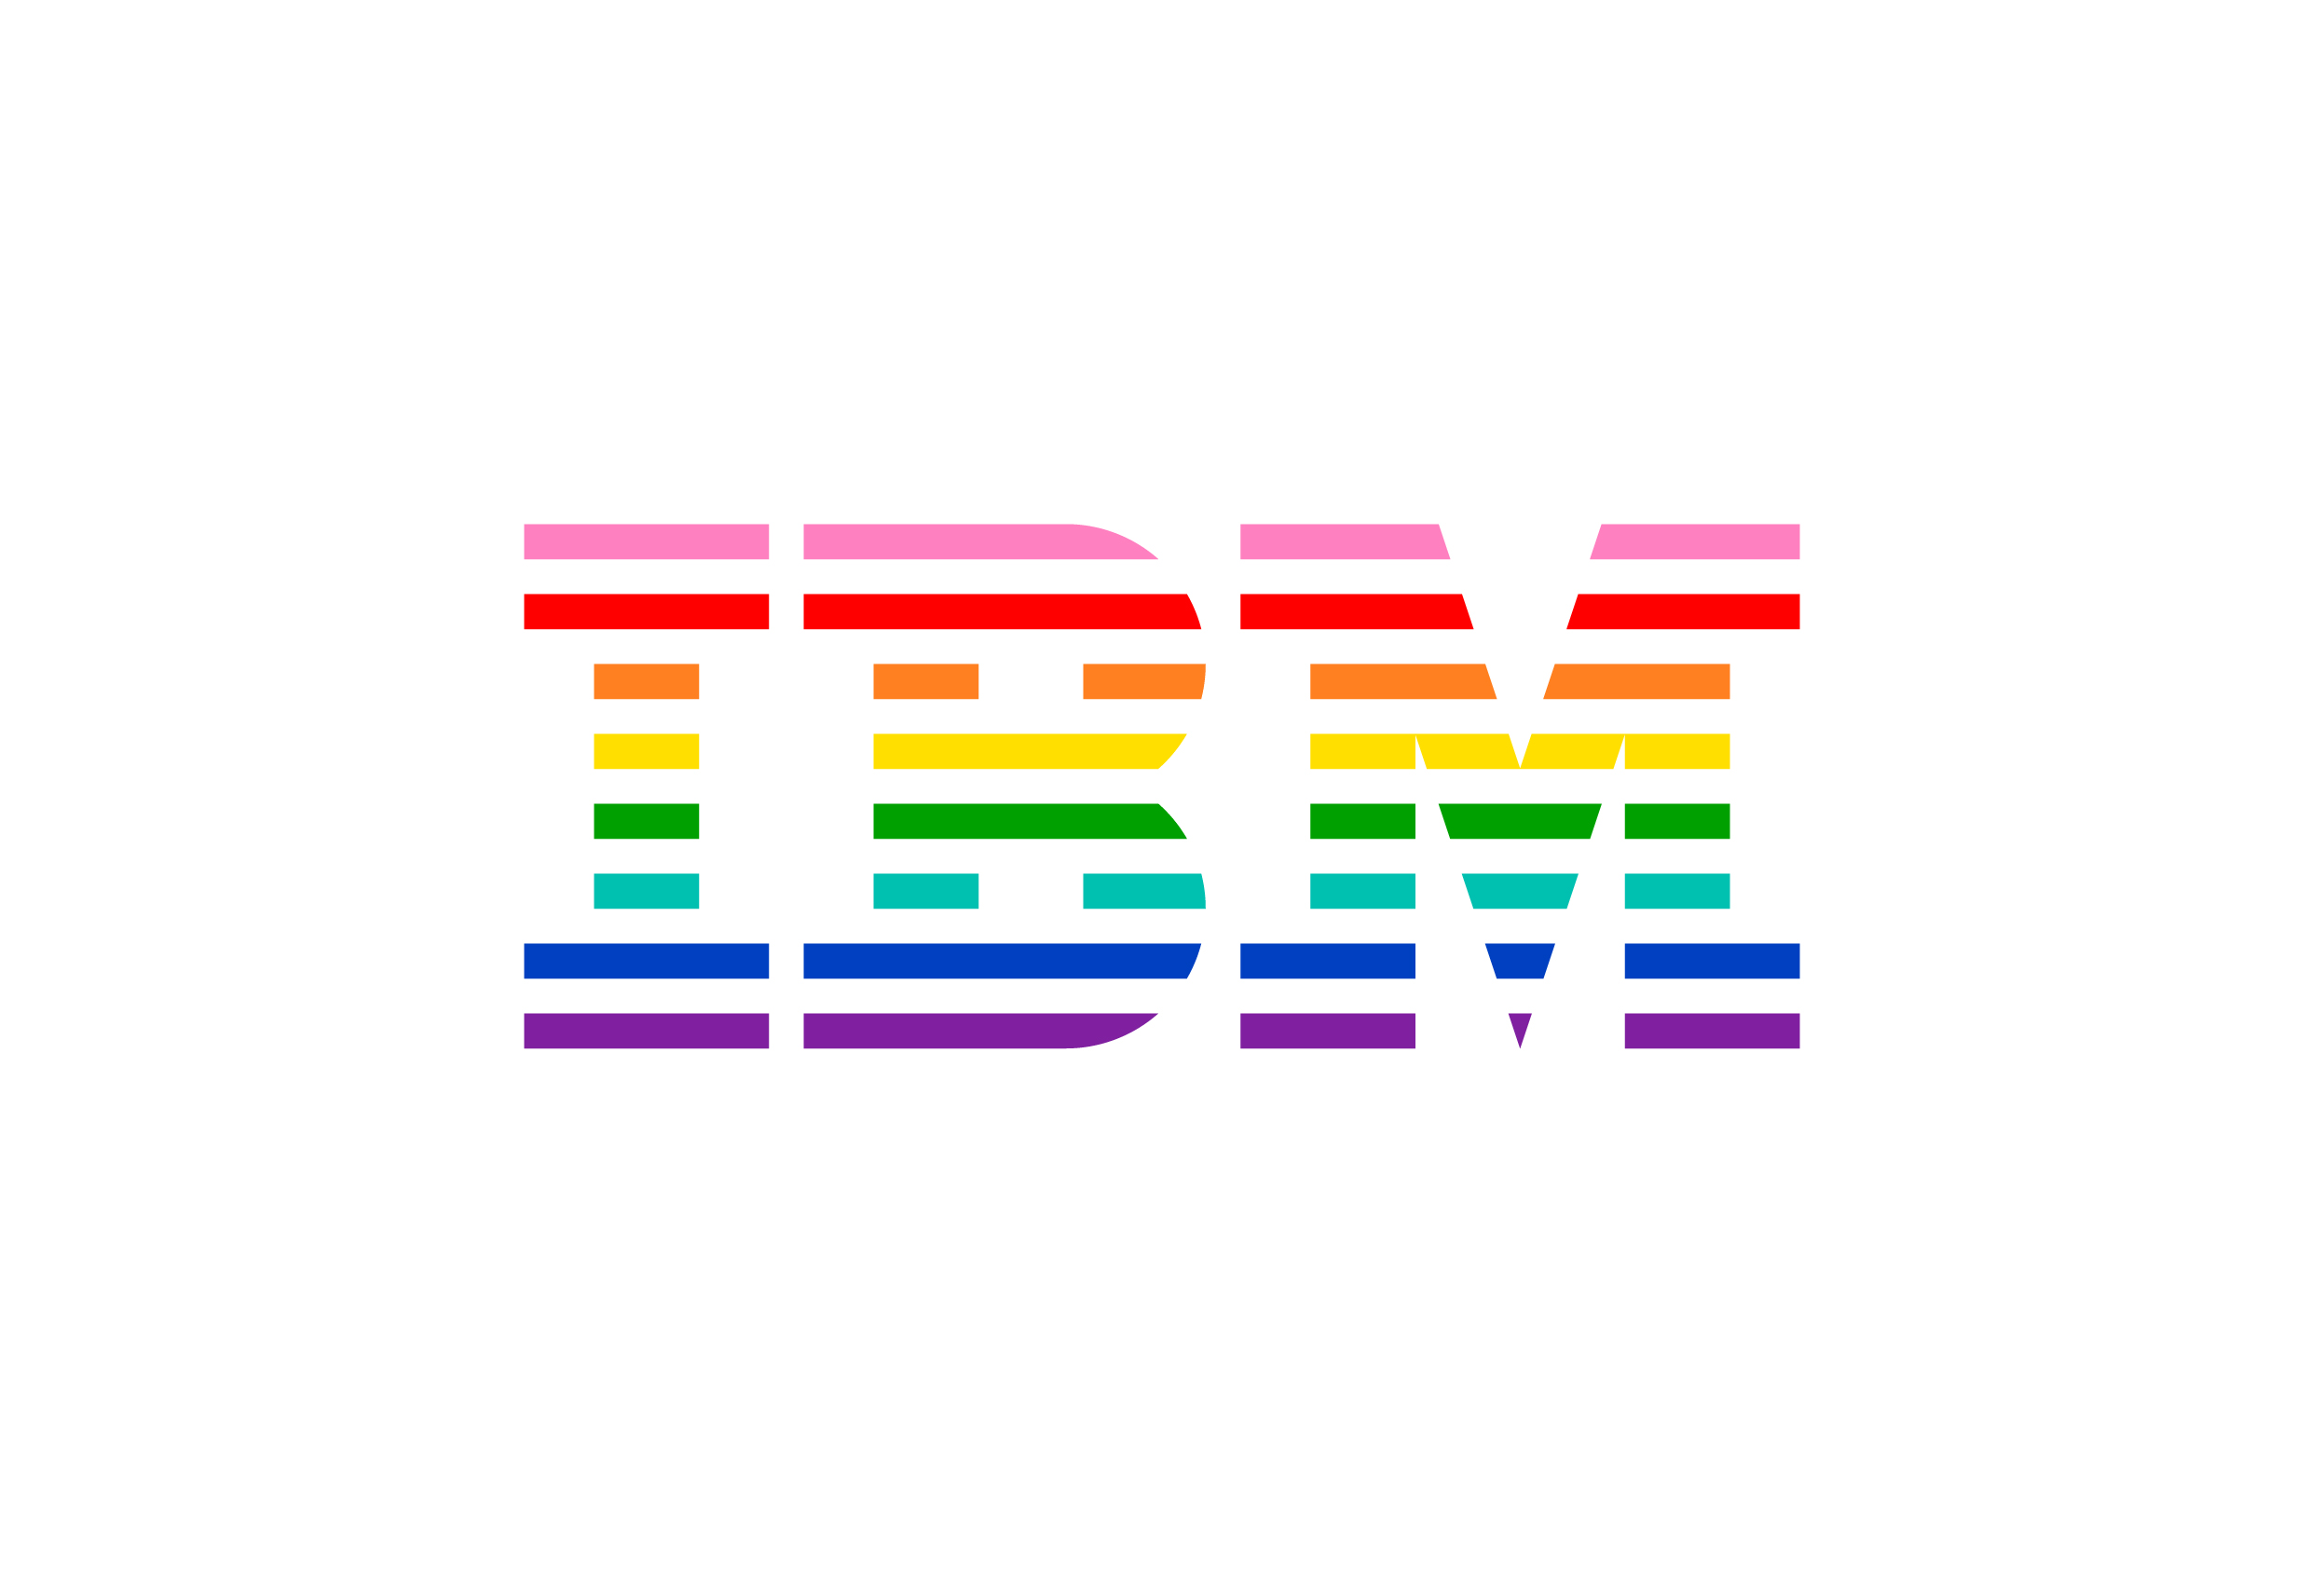 IBM of Support the Transgender Community